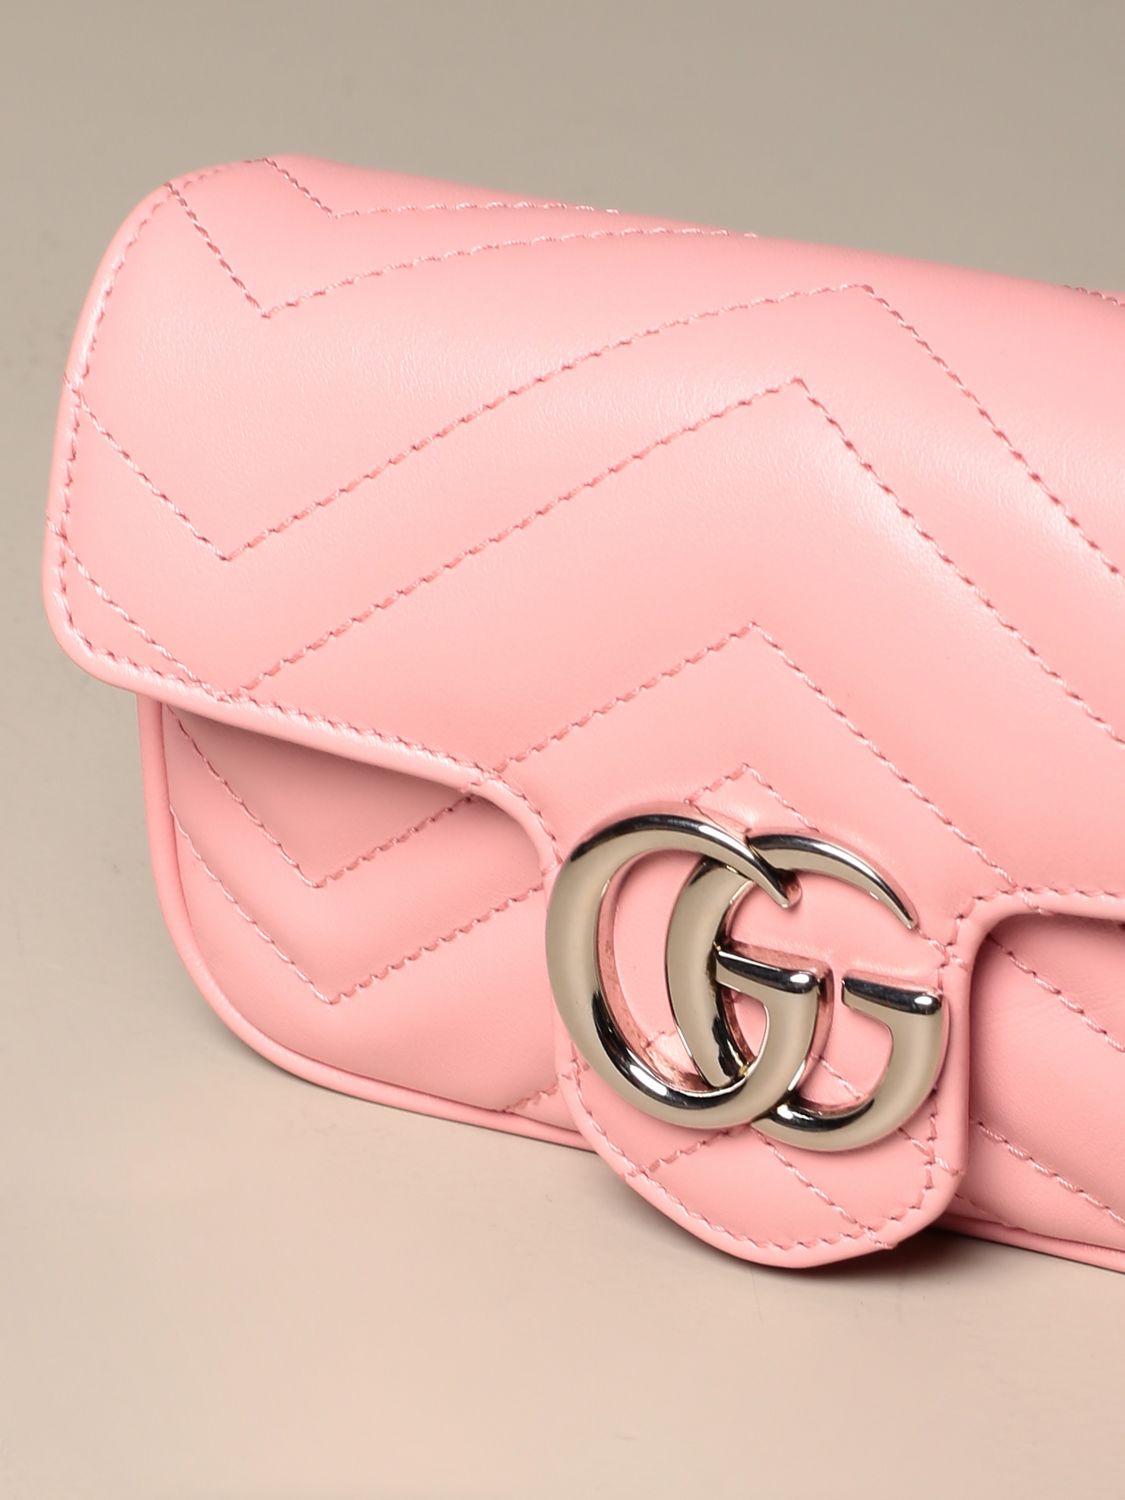 Gucci GG Marmont Pink Embroidery Super Mini Bag